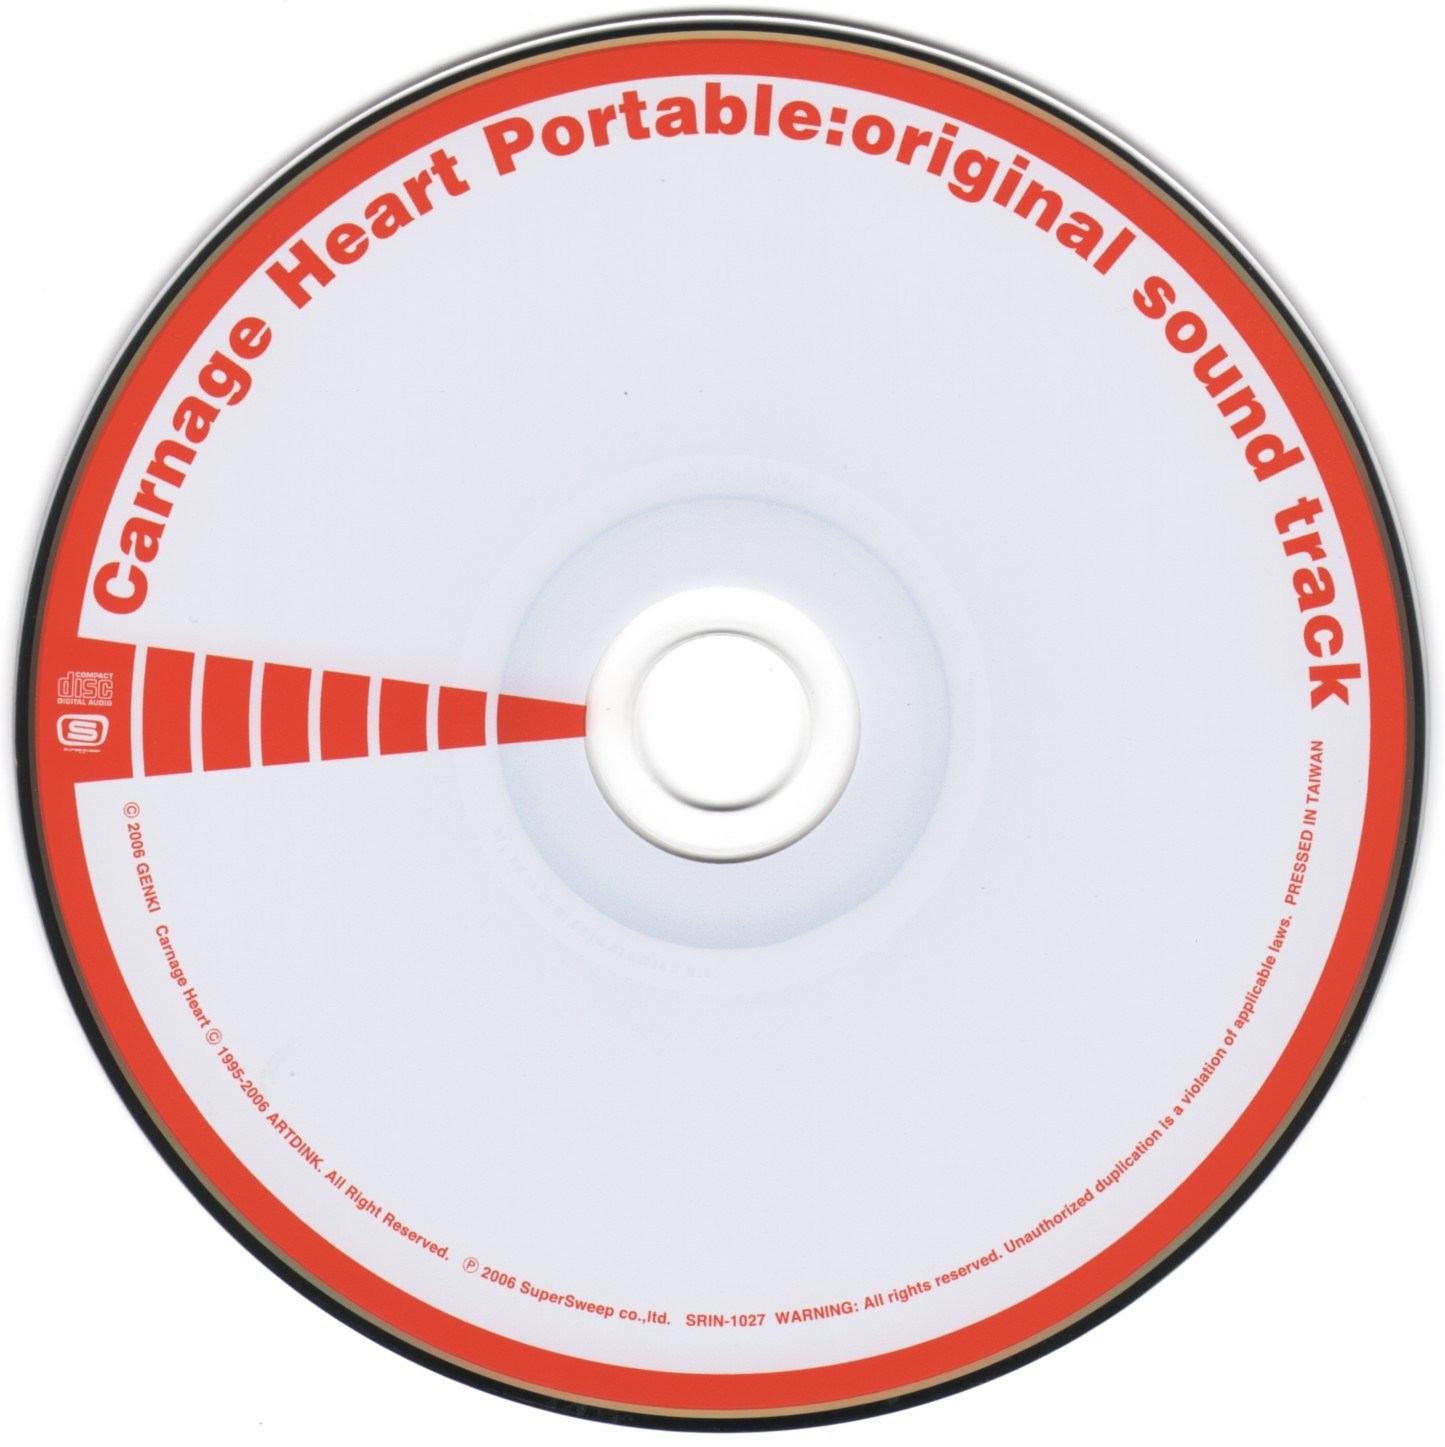 Carnage Heart Portable Original Sound Track (2006) MP3 - Download 